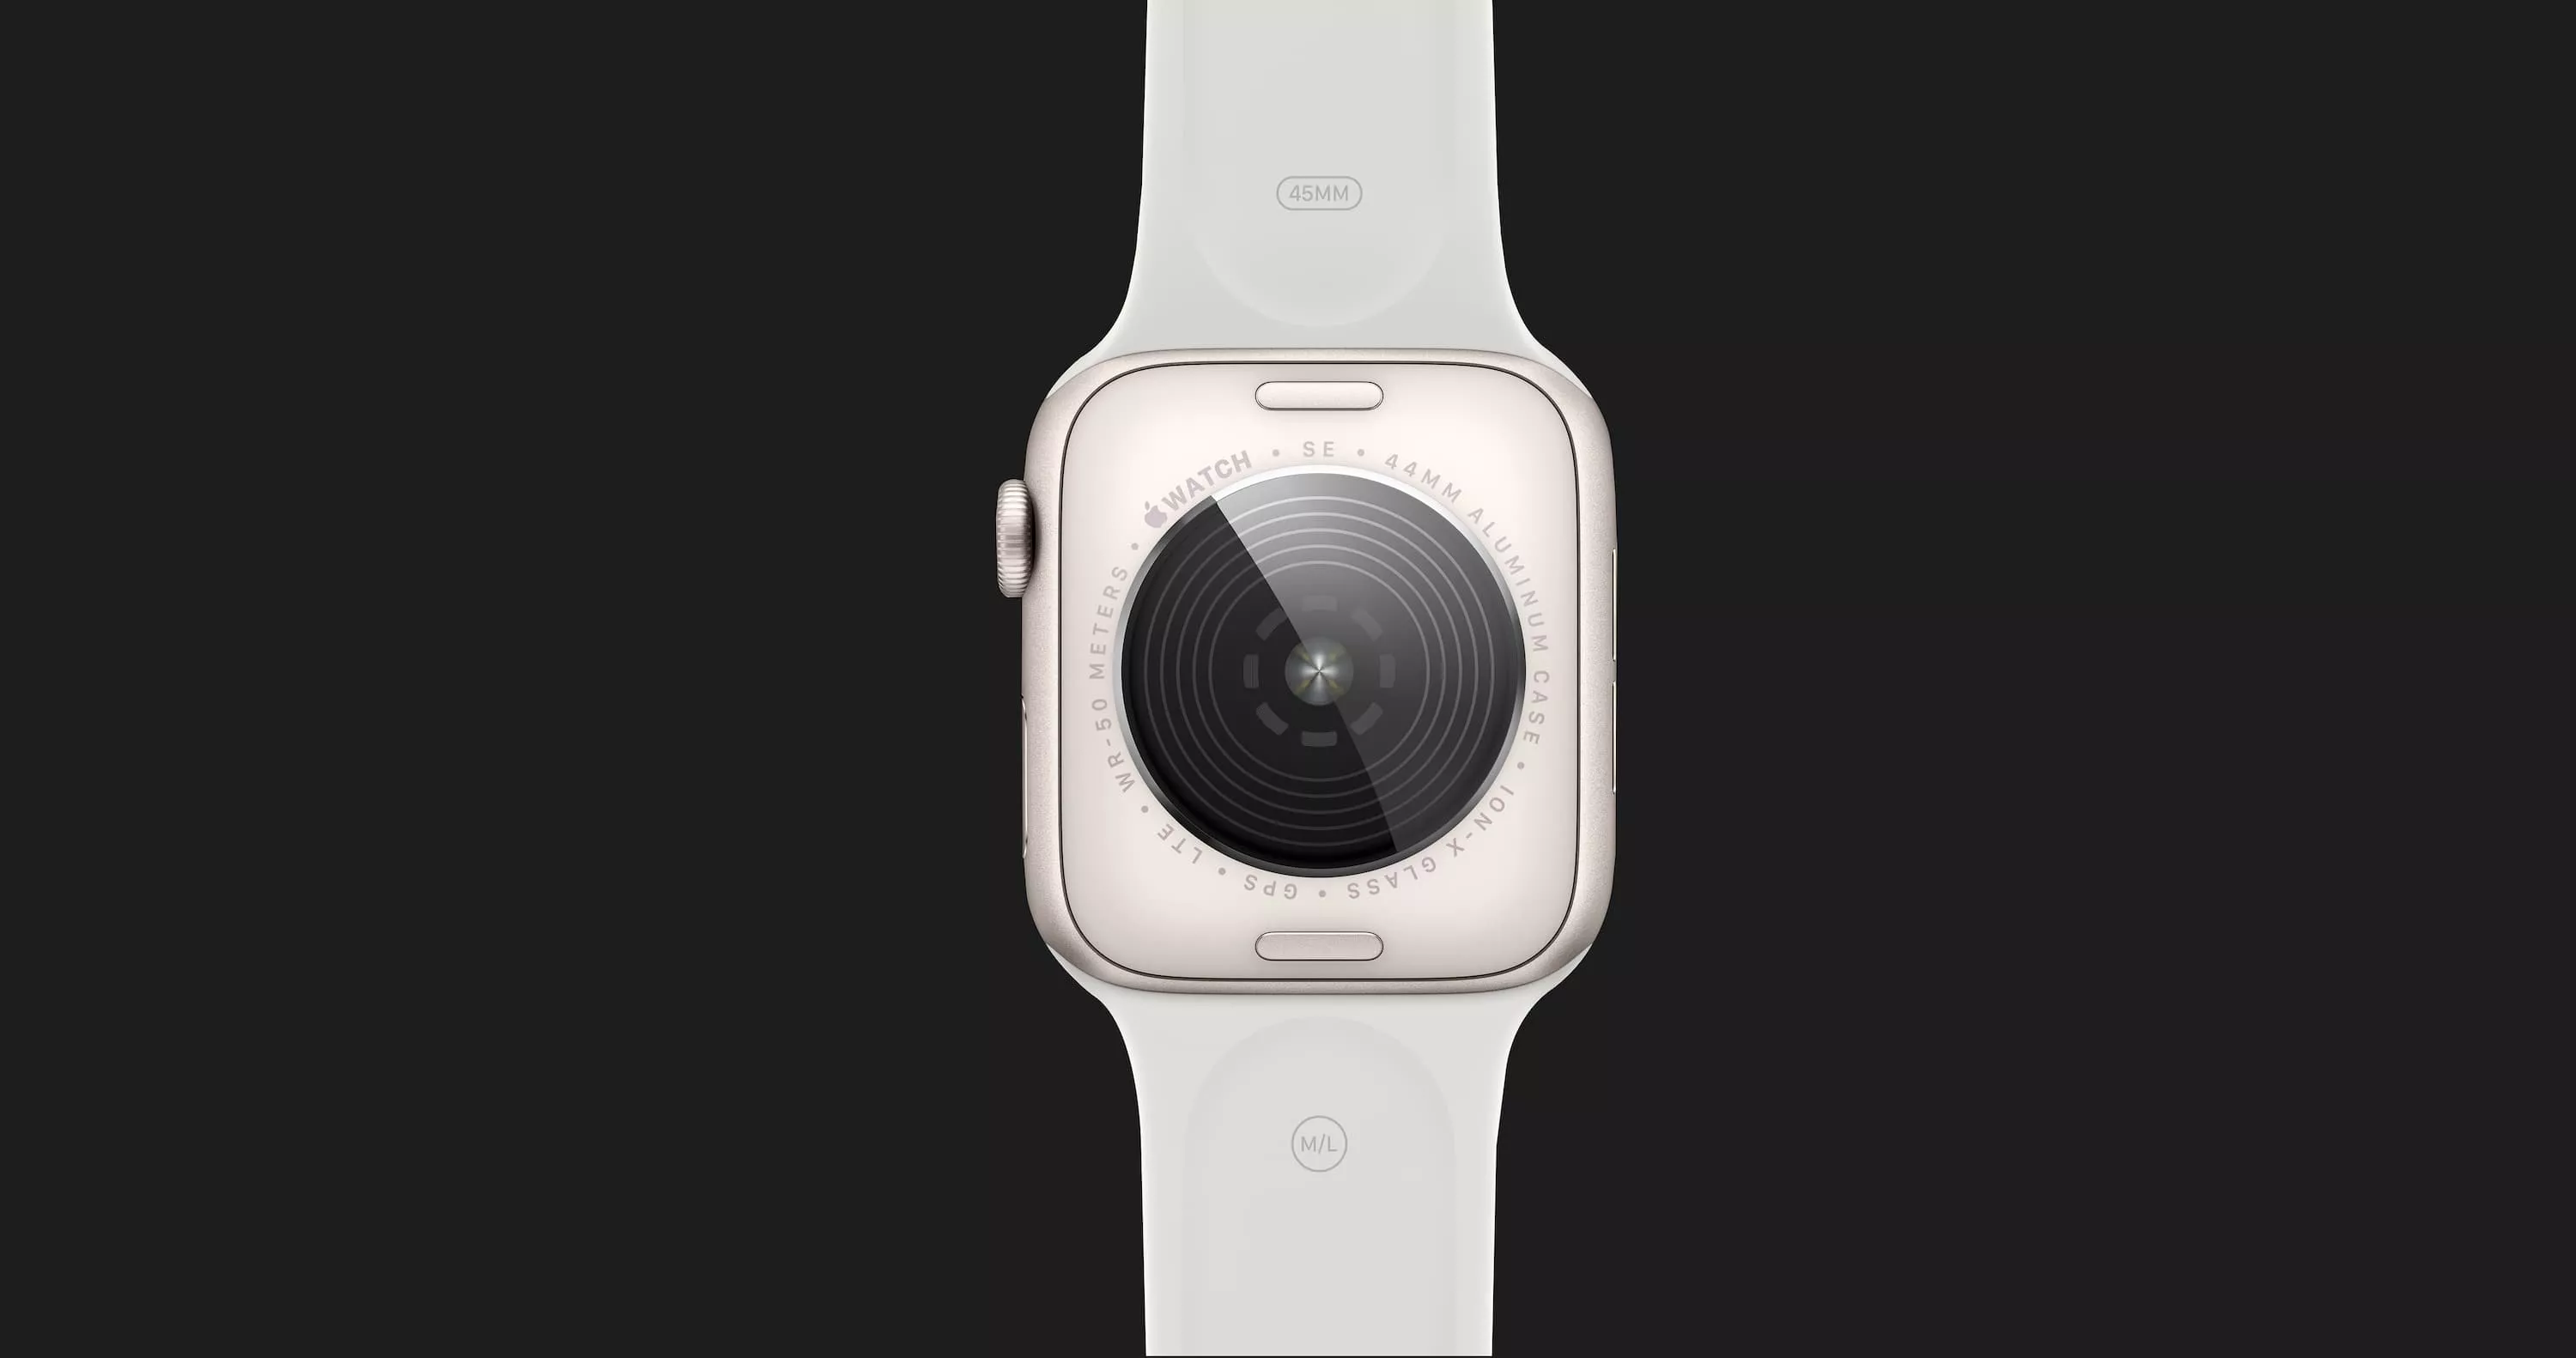 Apple Watch SE 2 44mm Midnight Aluminum Case with Black/Black Nike Sport Band